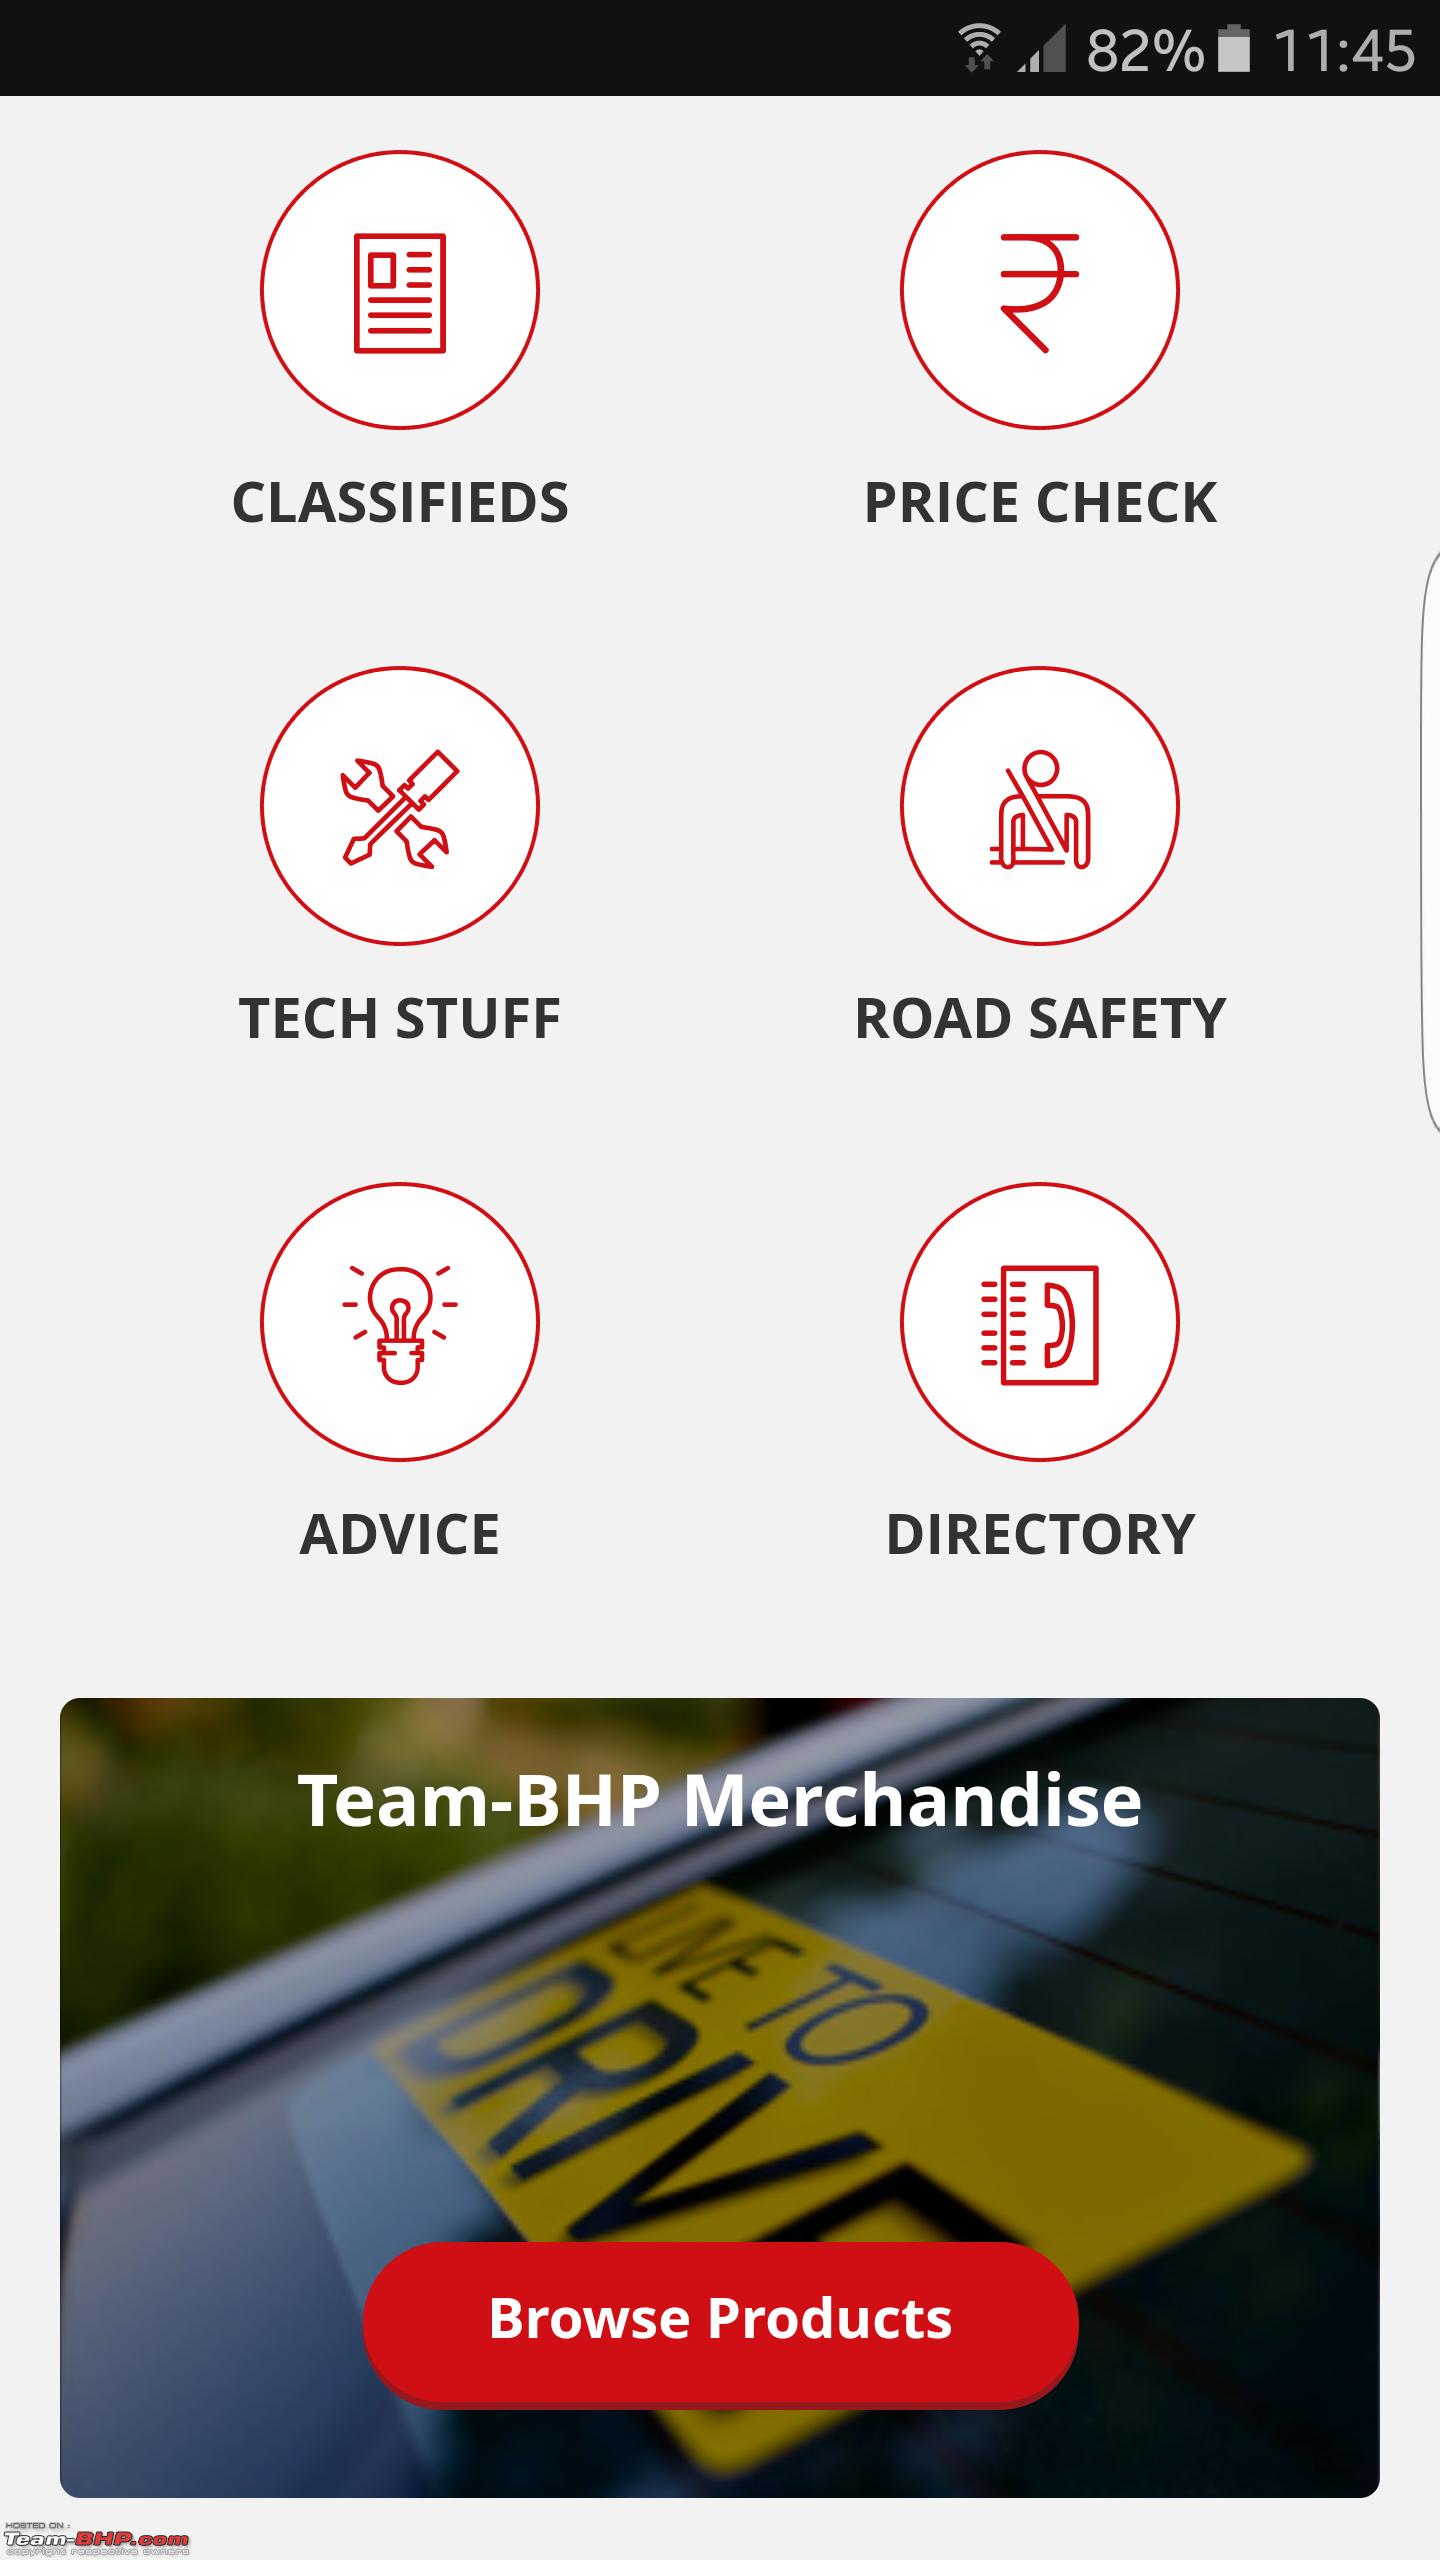 Team-BHP's 2016 Facelift: A new mobile website - Team-BHP